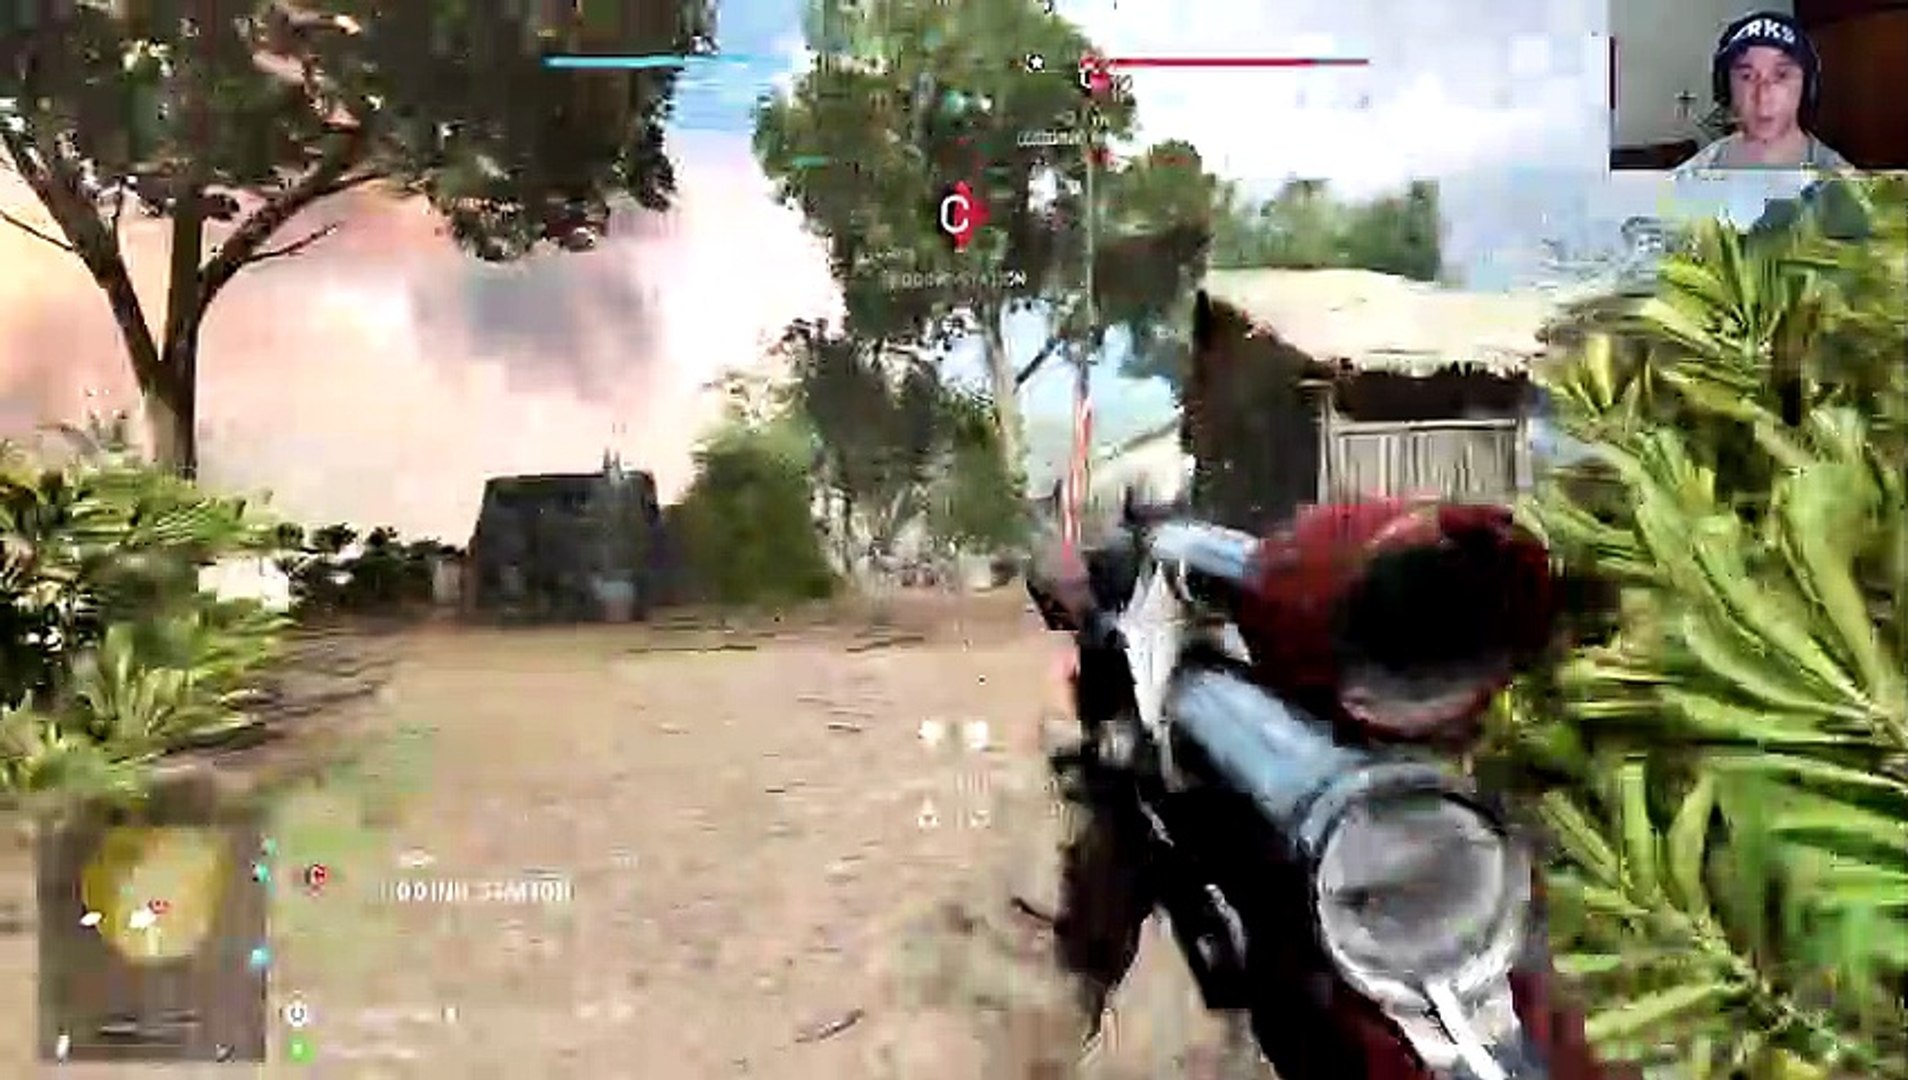 Battlefield 2 Gameplay Trailer - video Dailymotion